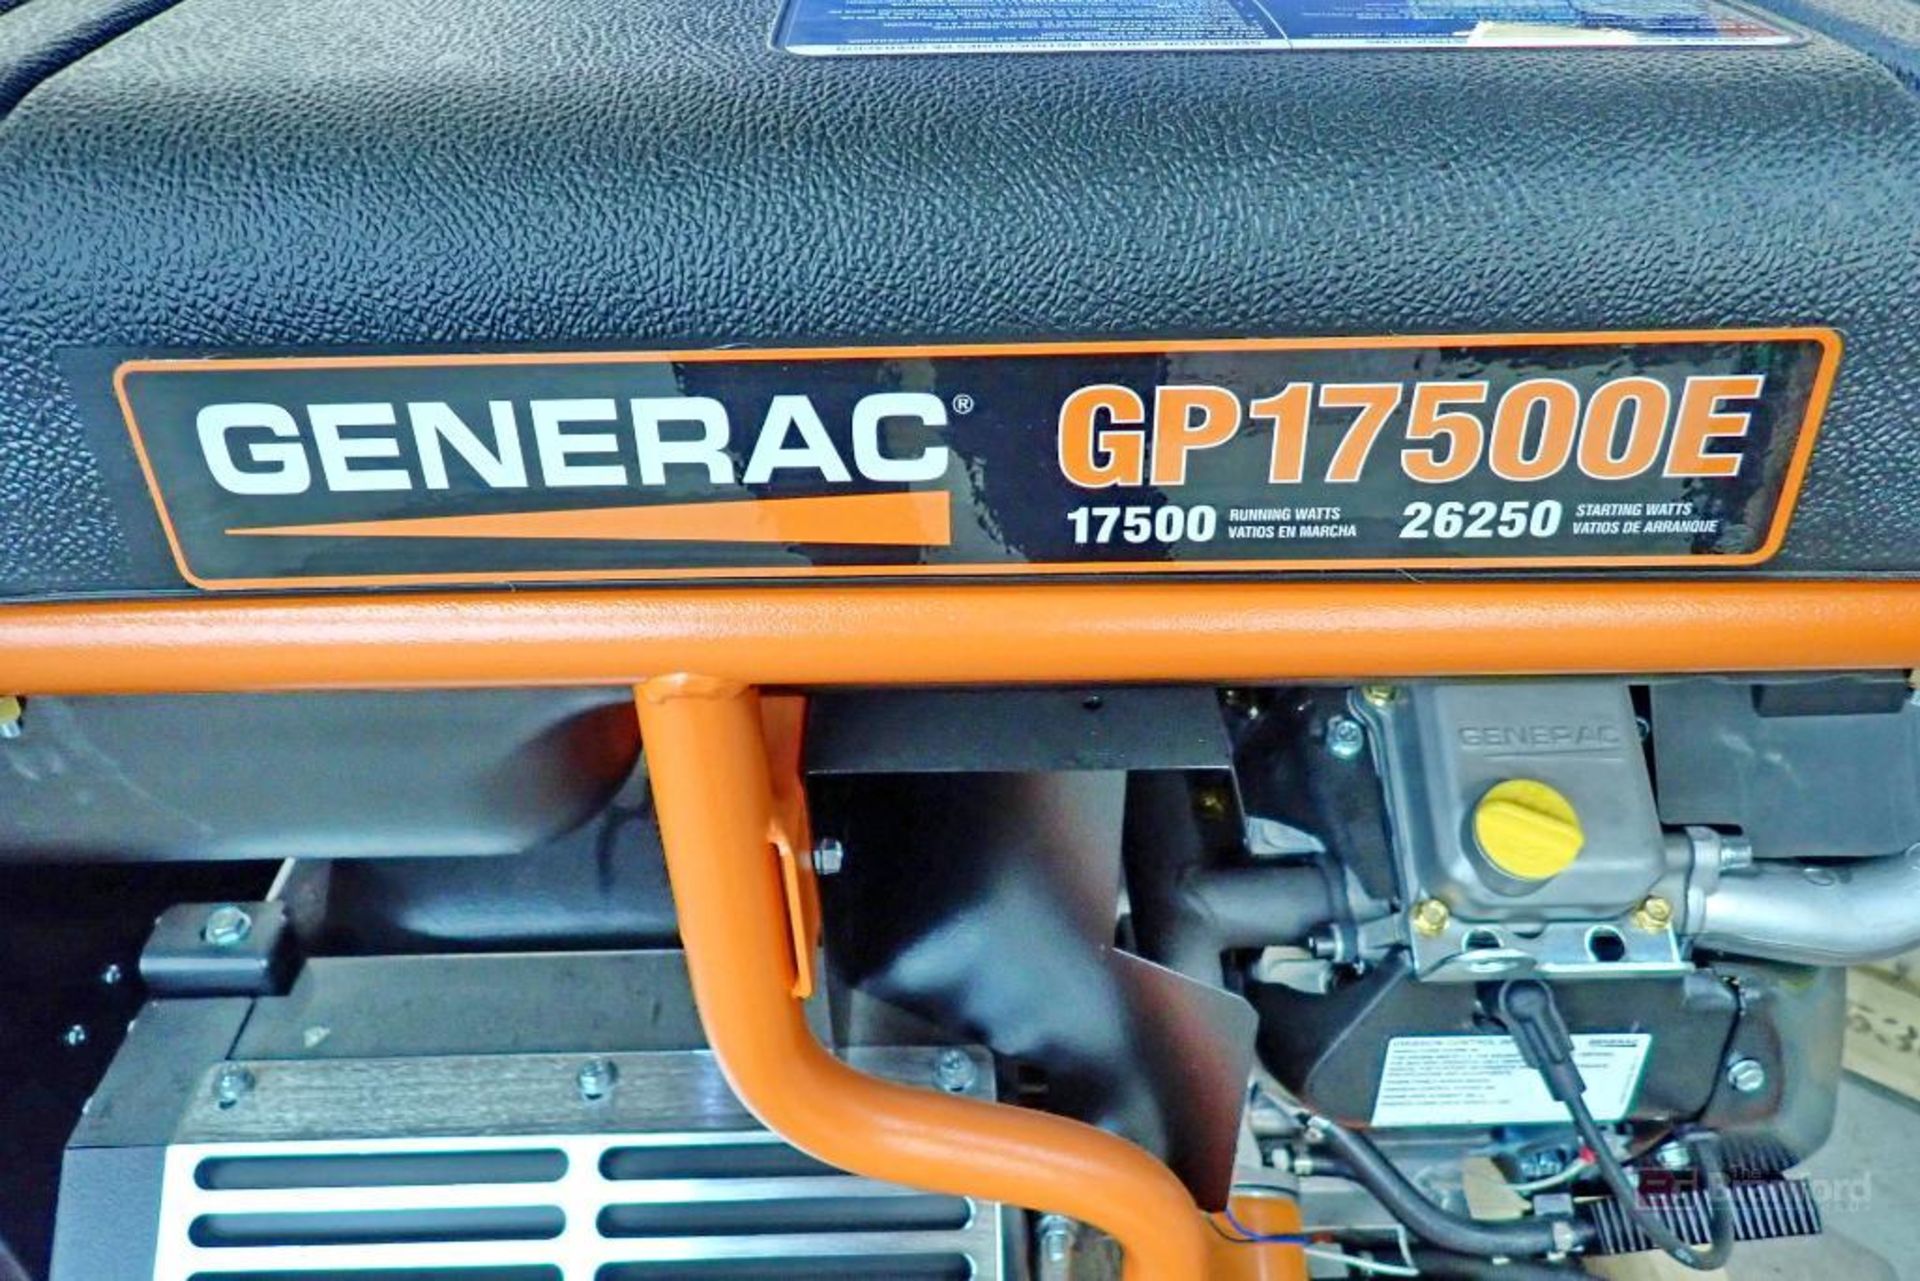 GENERAC GP17500E Gas Powered Generator - Image 2 of 12